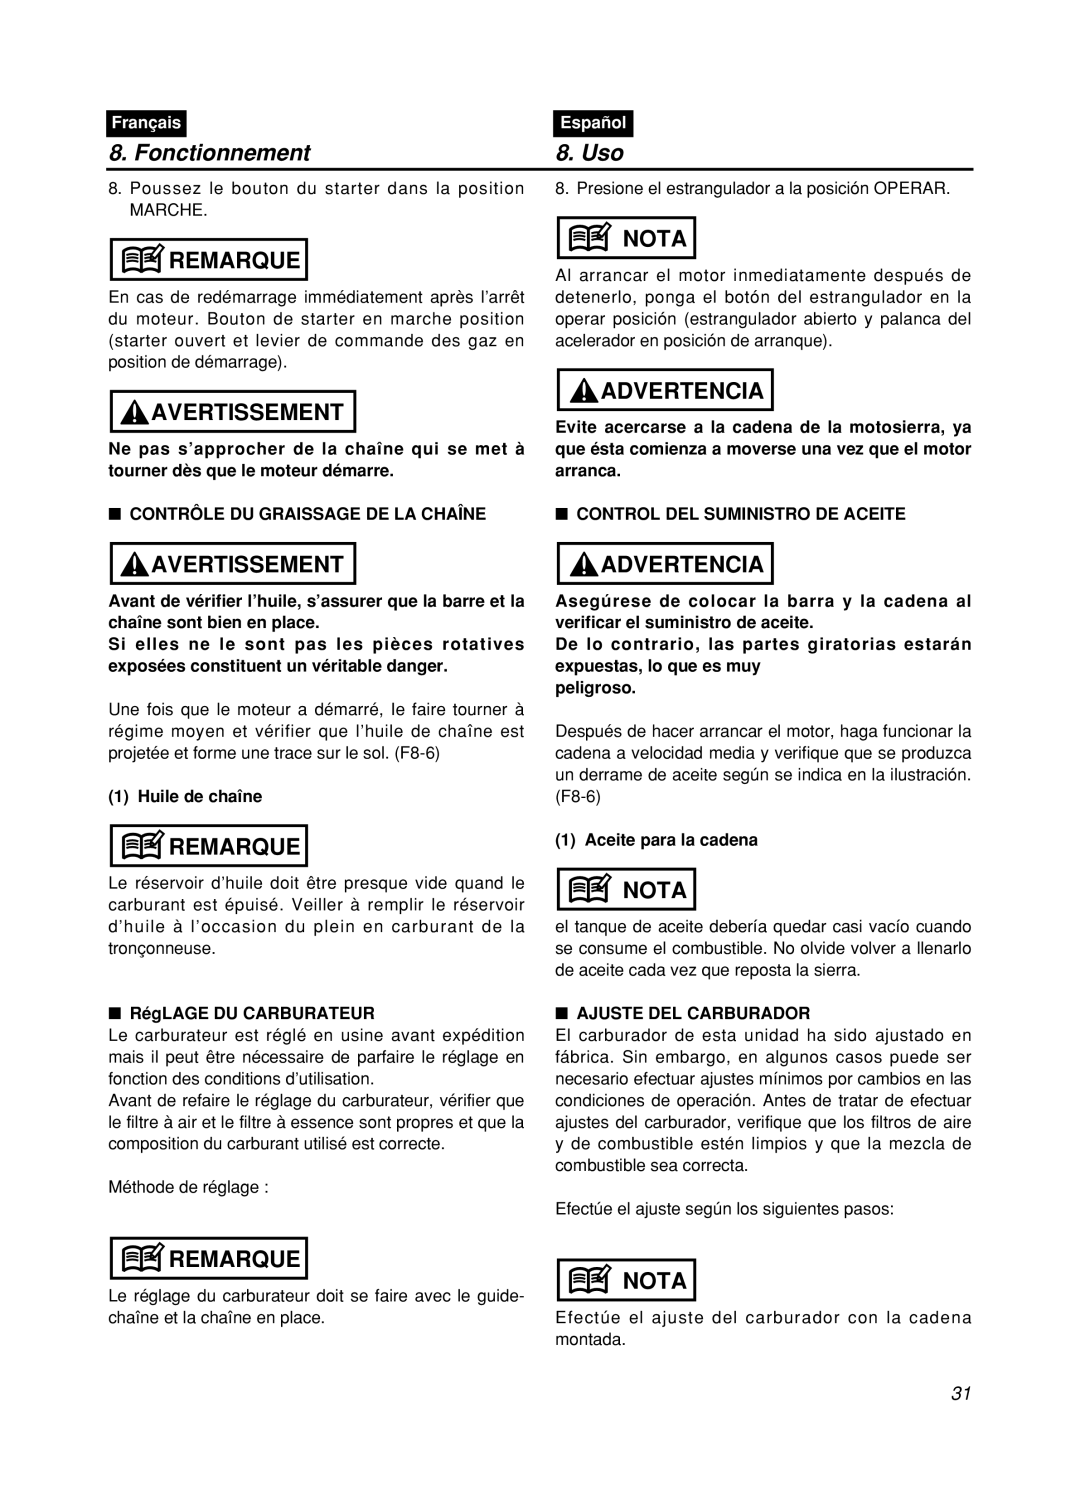 Zenoah GZ400 manual Fonctionnement, Uso, Remarque, Avertissement, Nota, Advertencia 